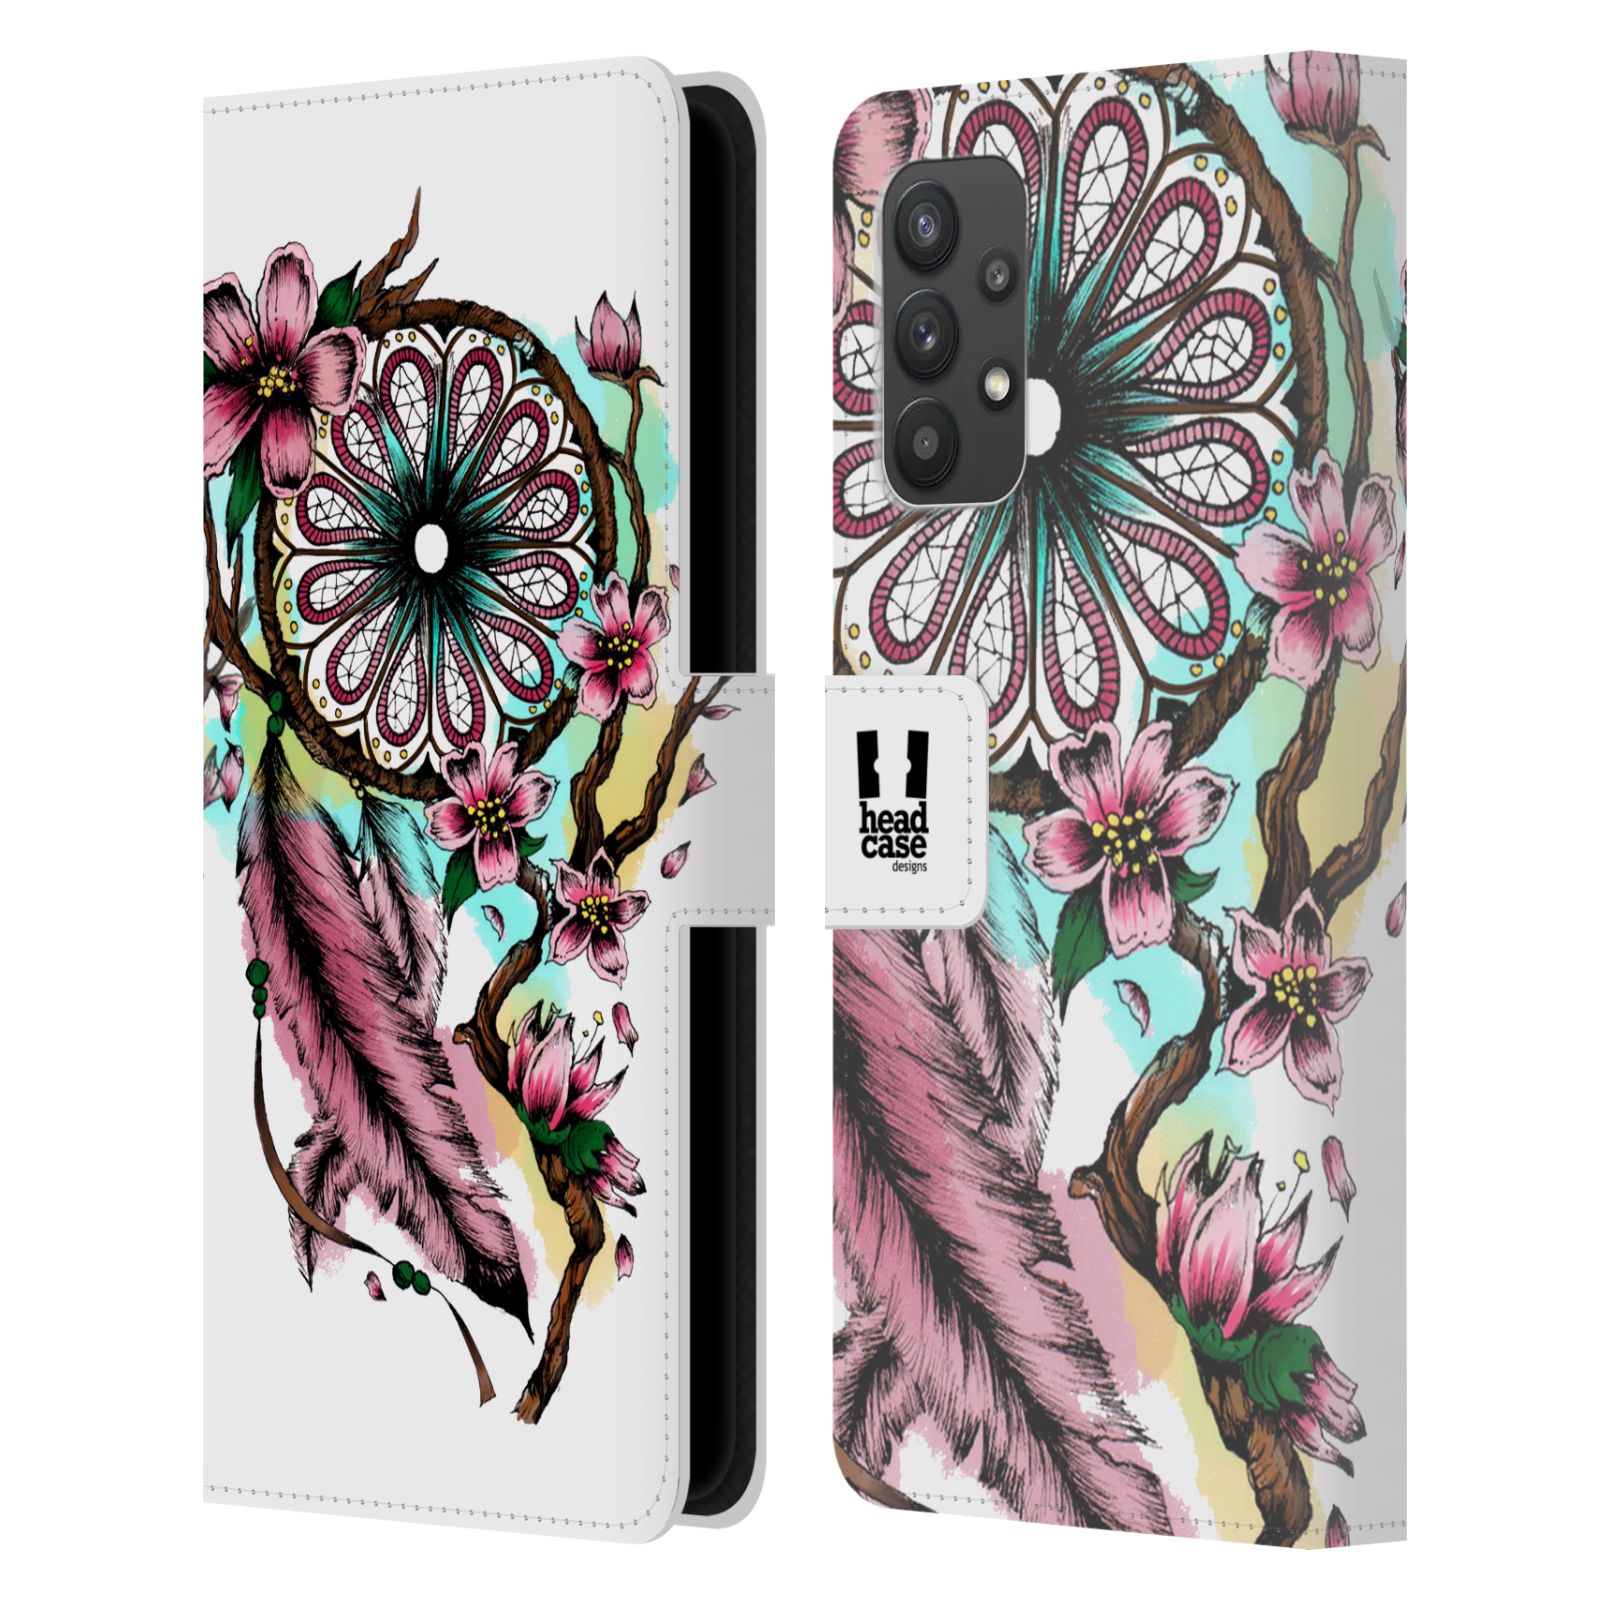 Pouzdro pro mobil Samsung Galaxy A32 5G - HEAD CASE - Květinový vzor lapač snů